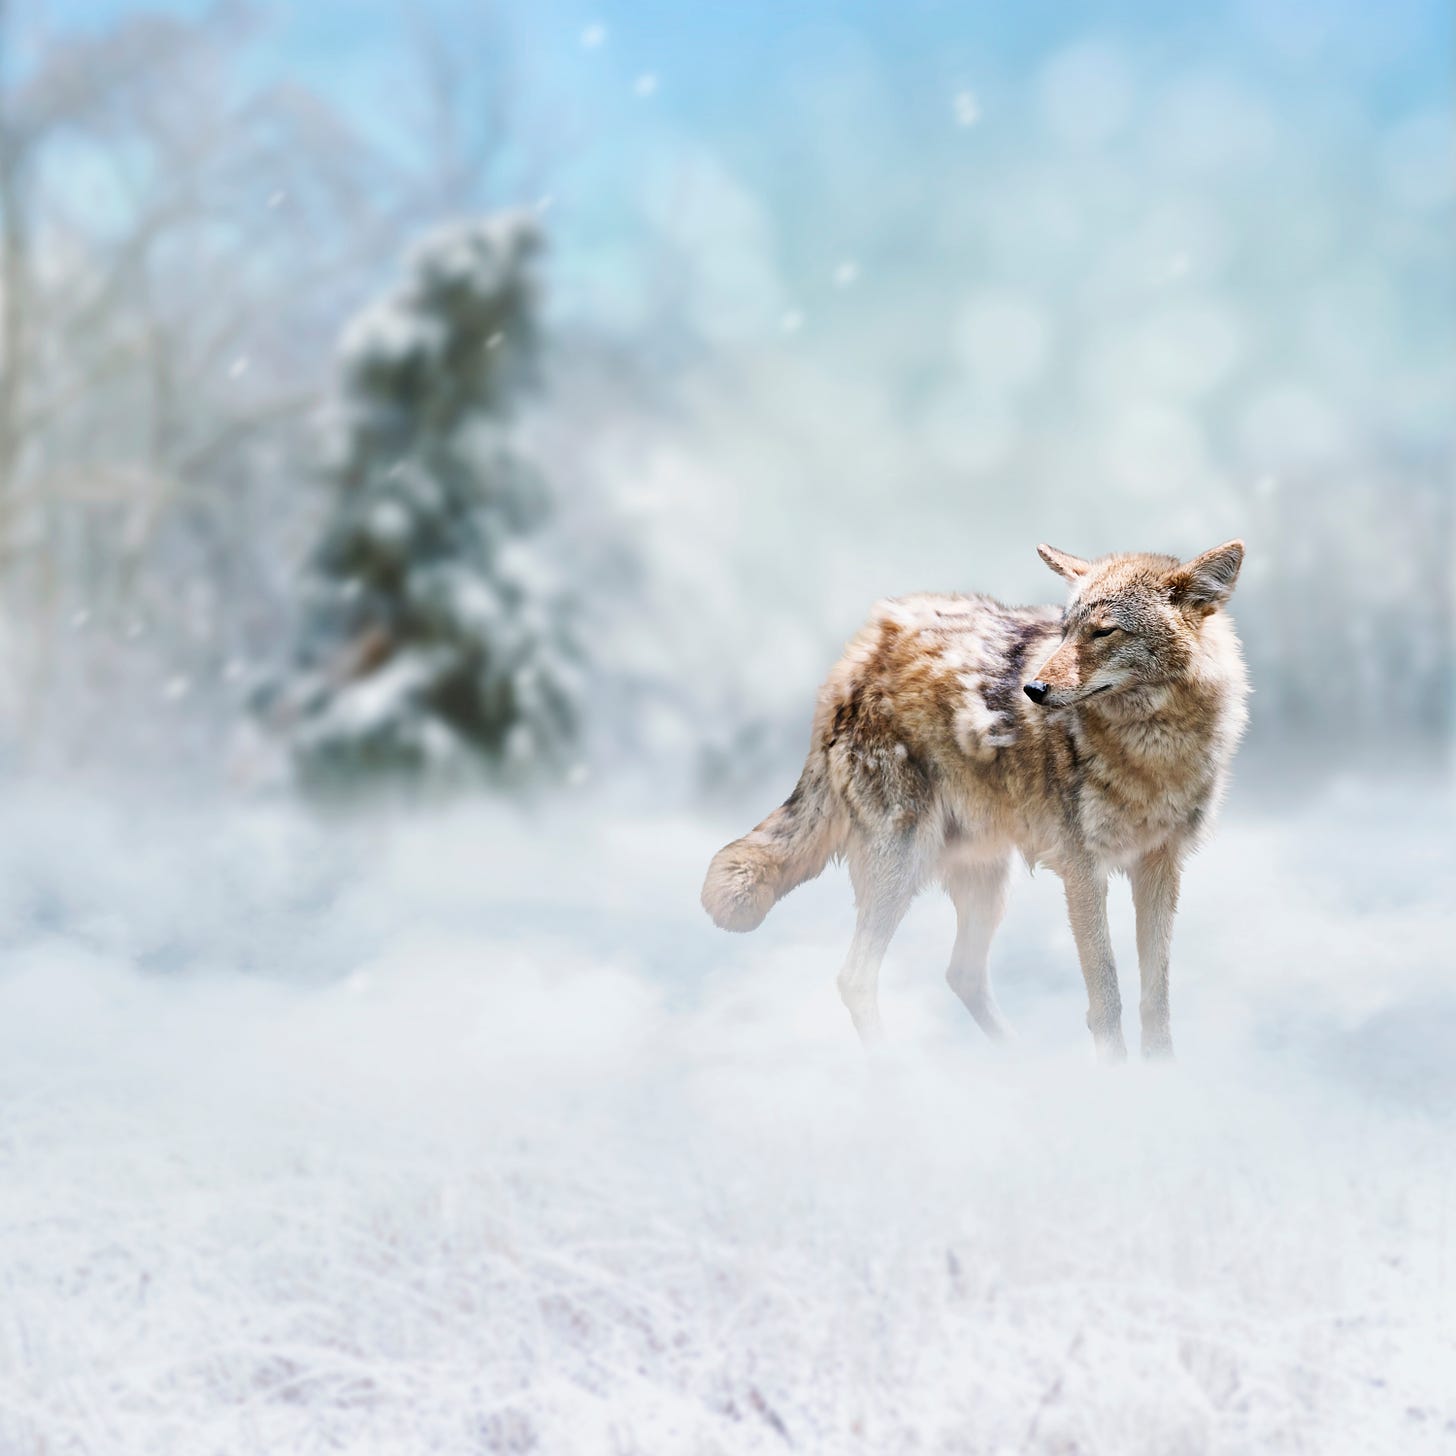 Coyote in winter